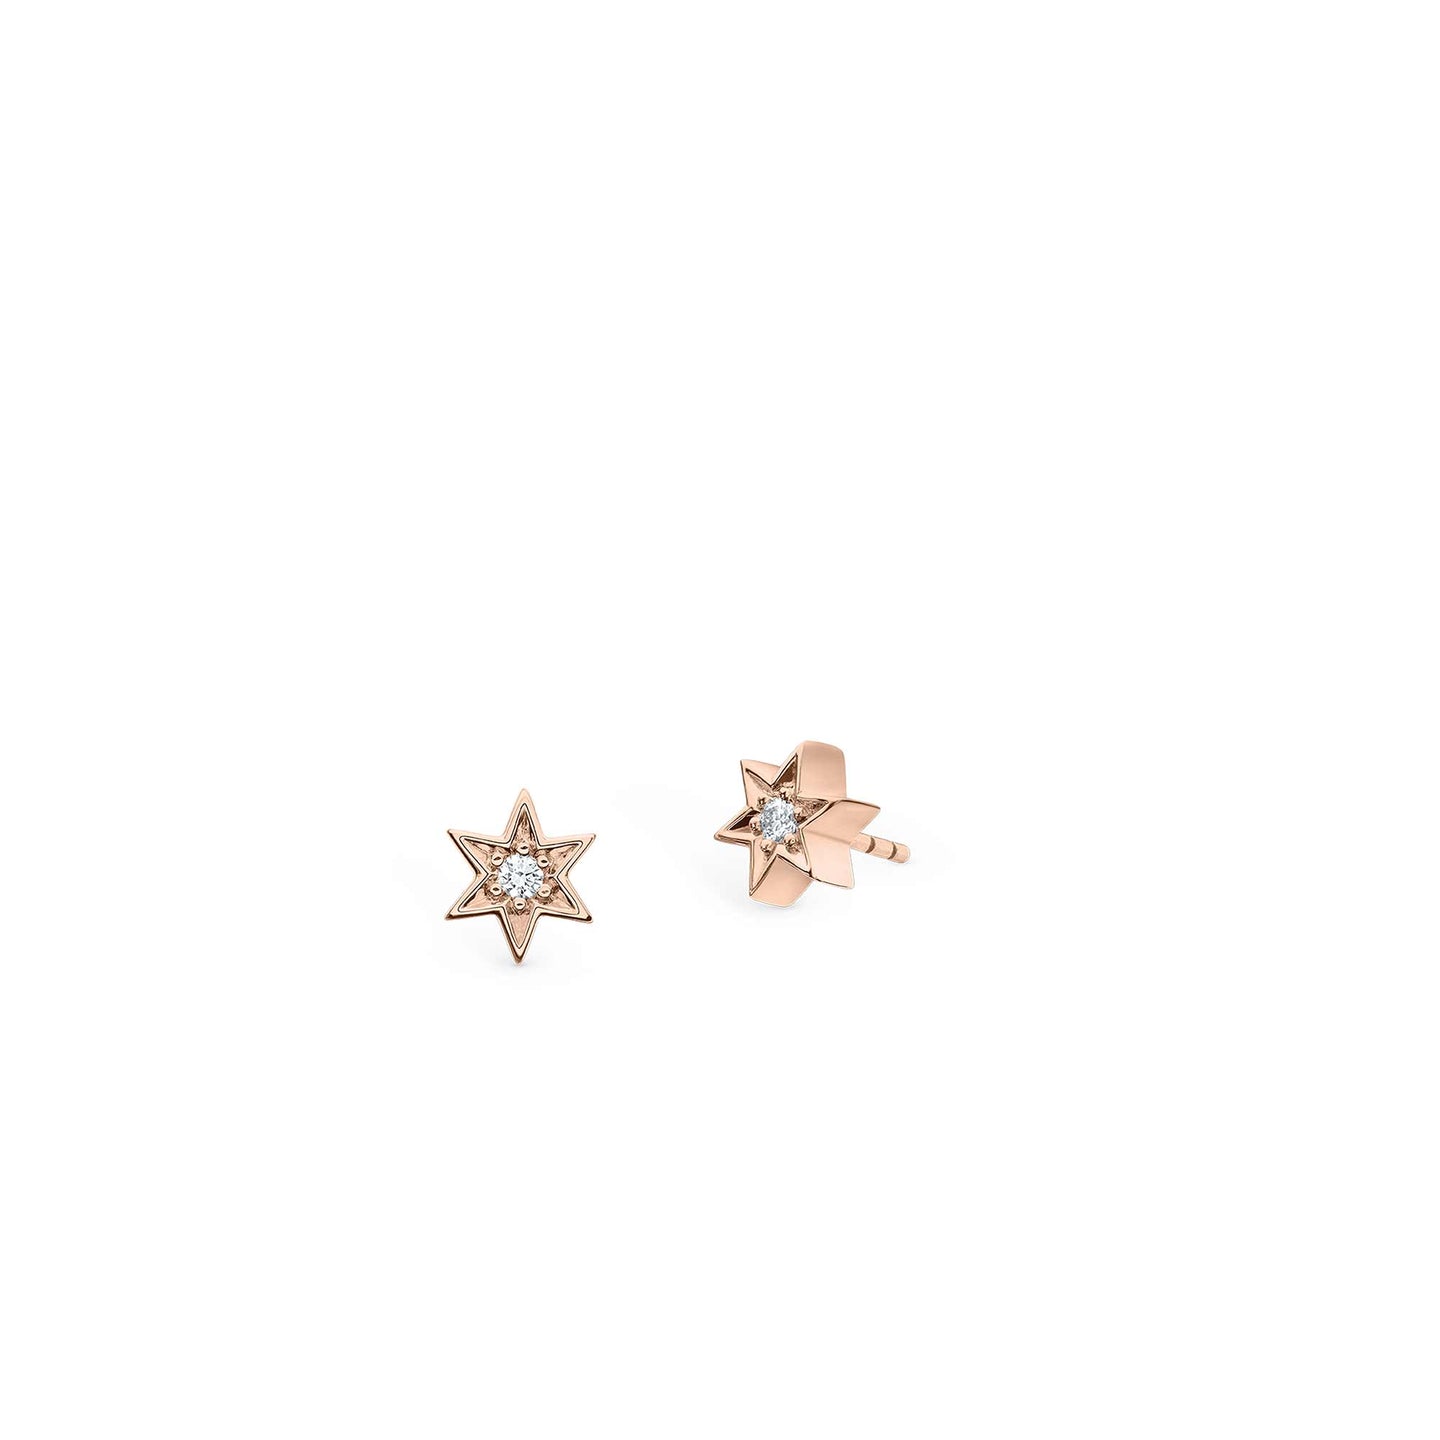 Cosmic Stargazer Earrings in 18ct Rose Gold with Diamonds